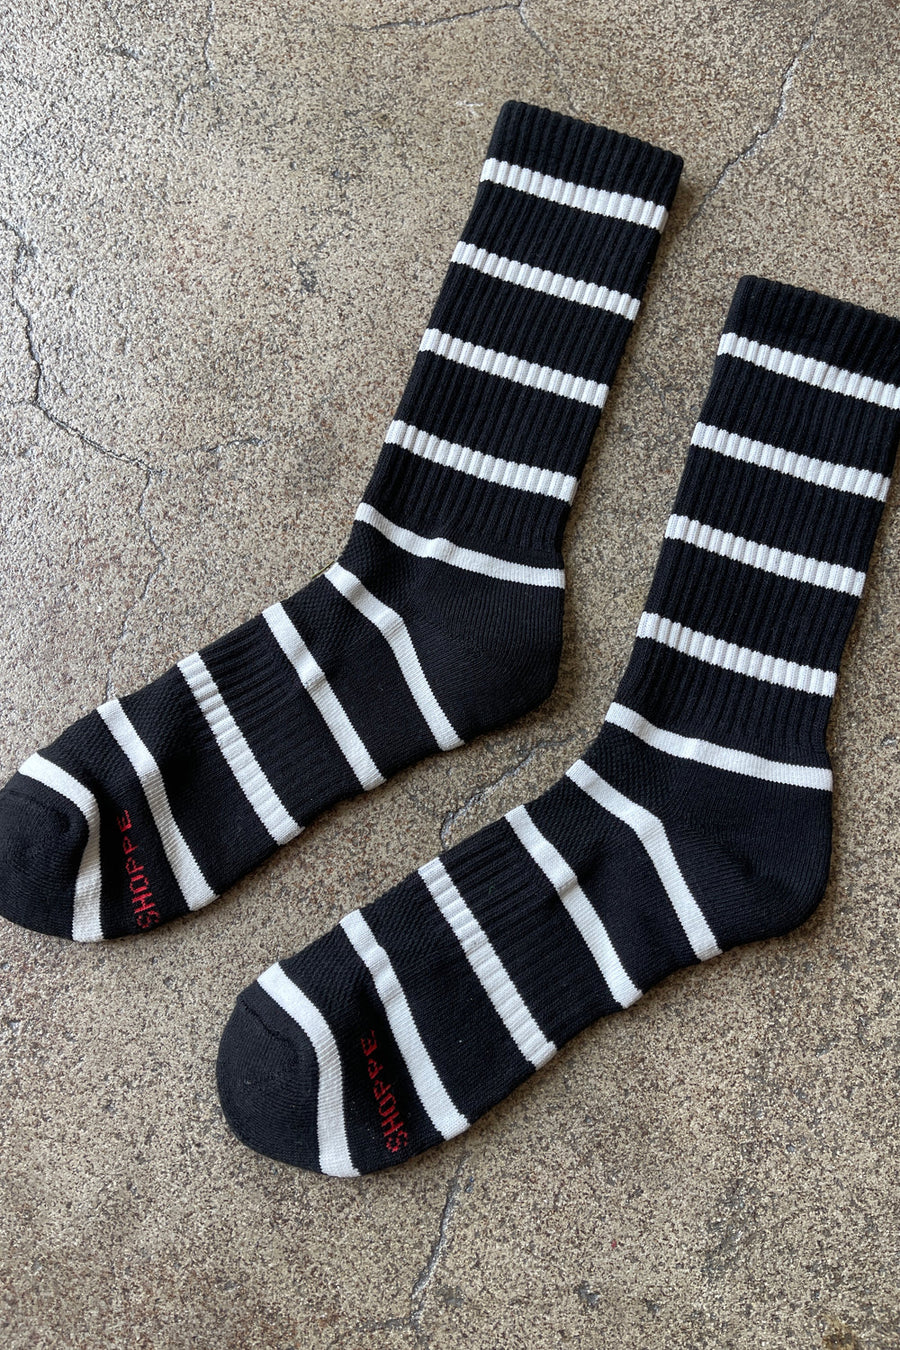 Extended Boyfriend Socks - Black Stripe